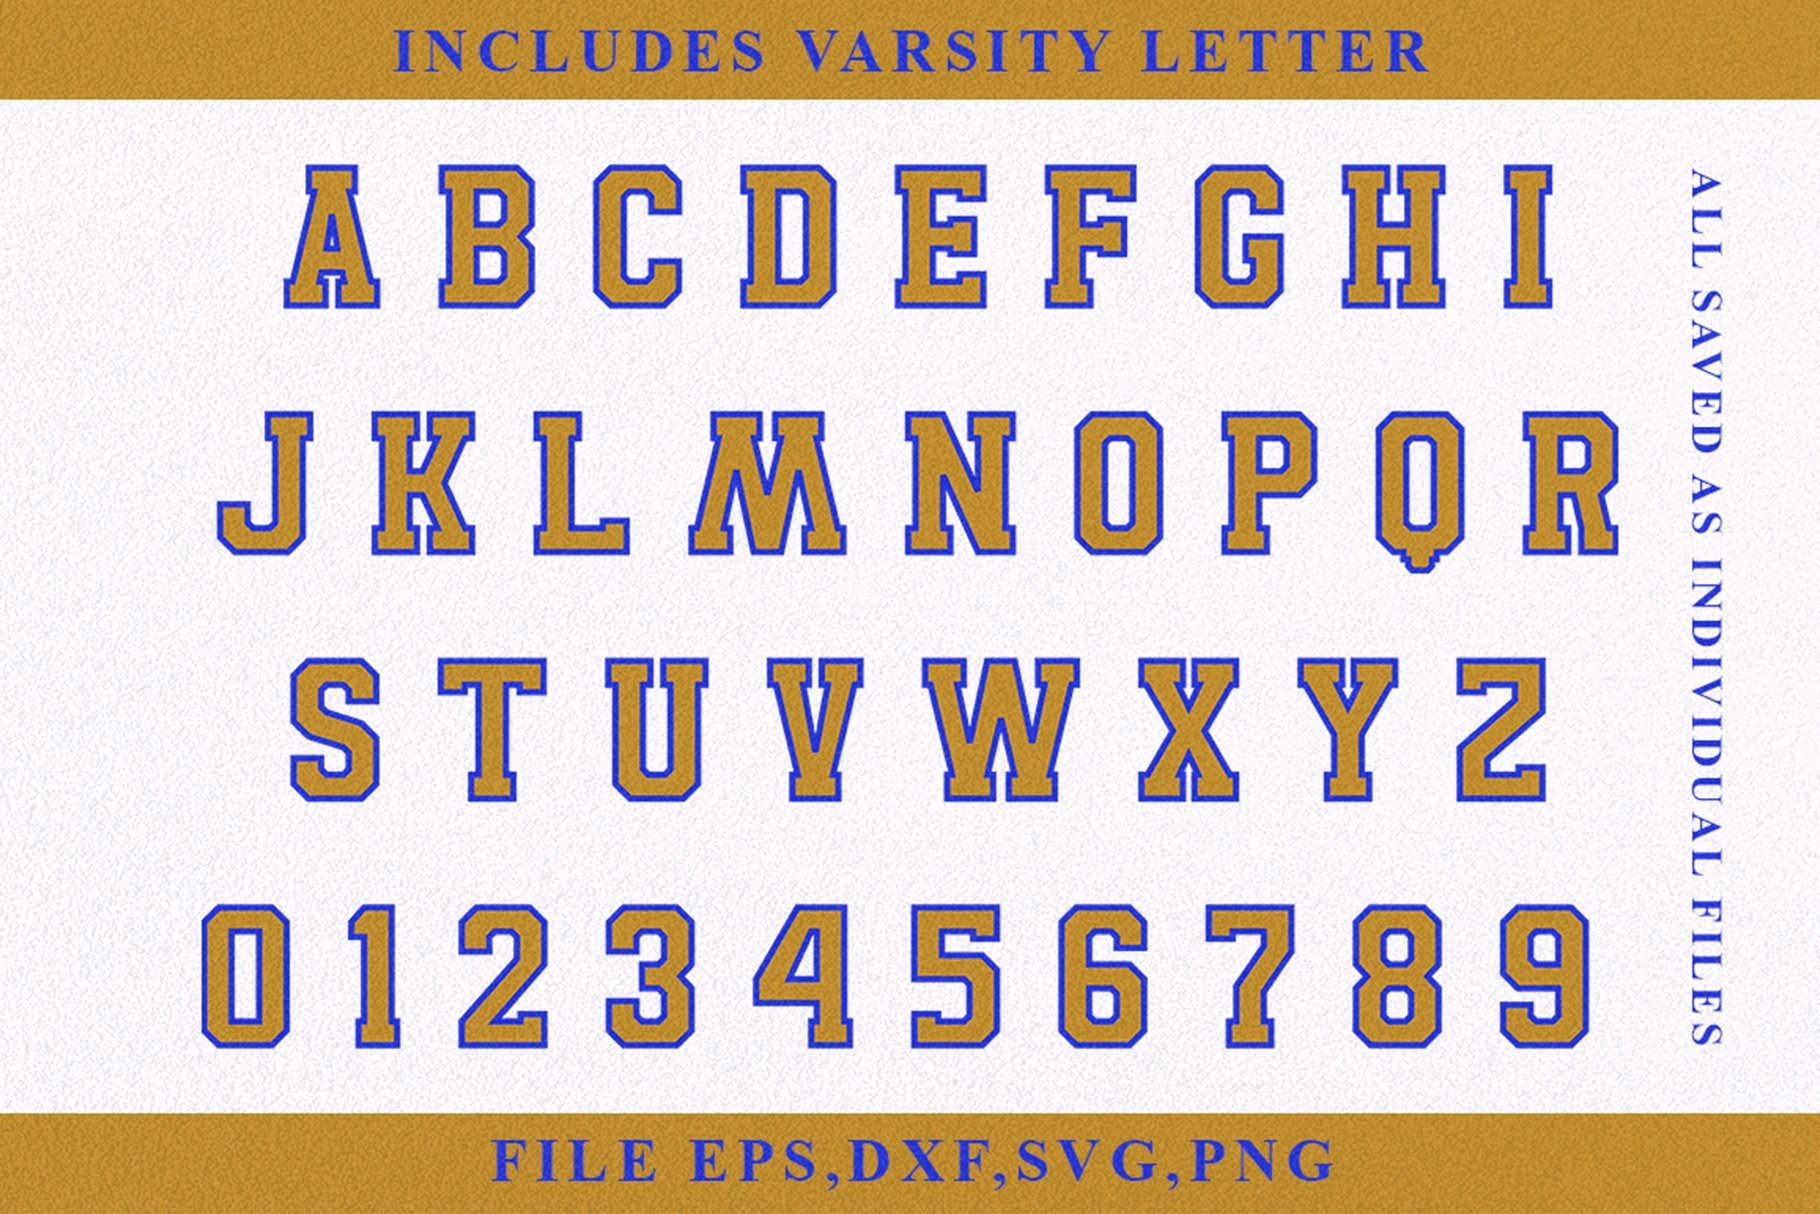 Mazquest Font - Sporty And Varsity Font - Design Cuts